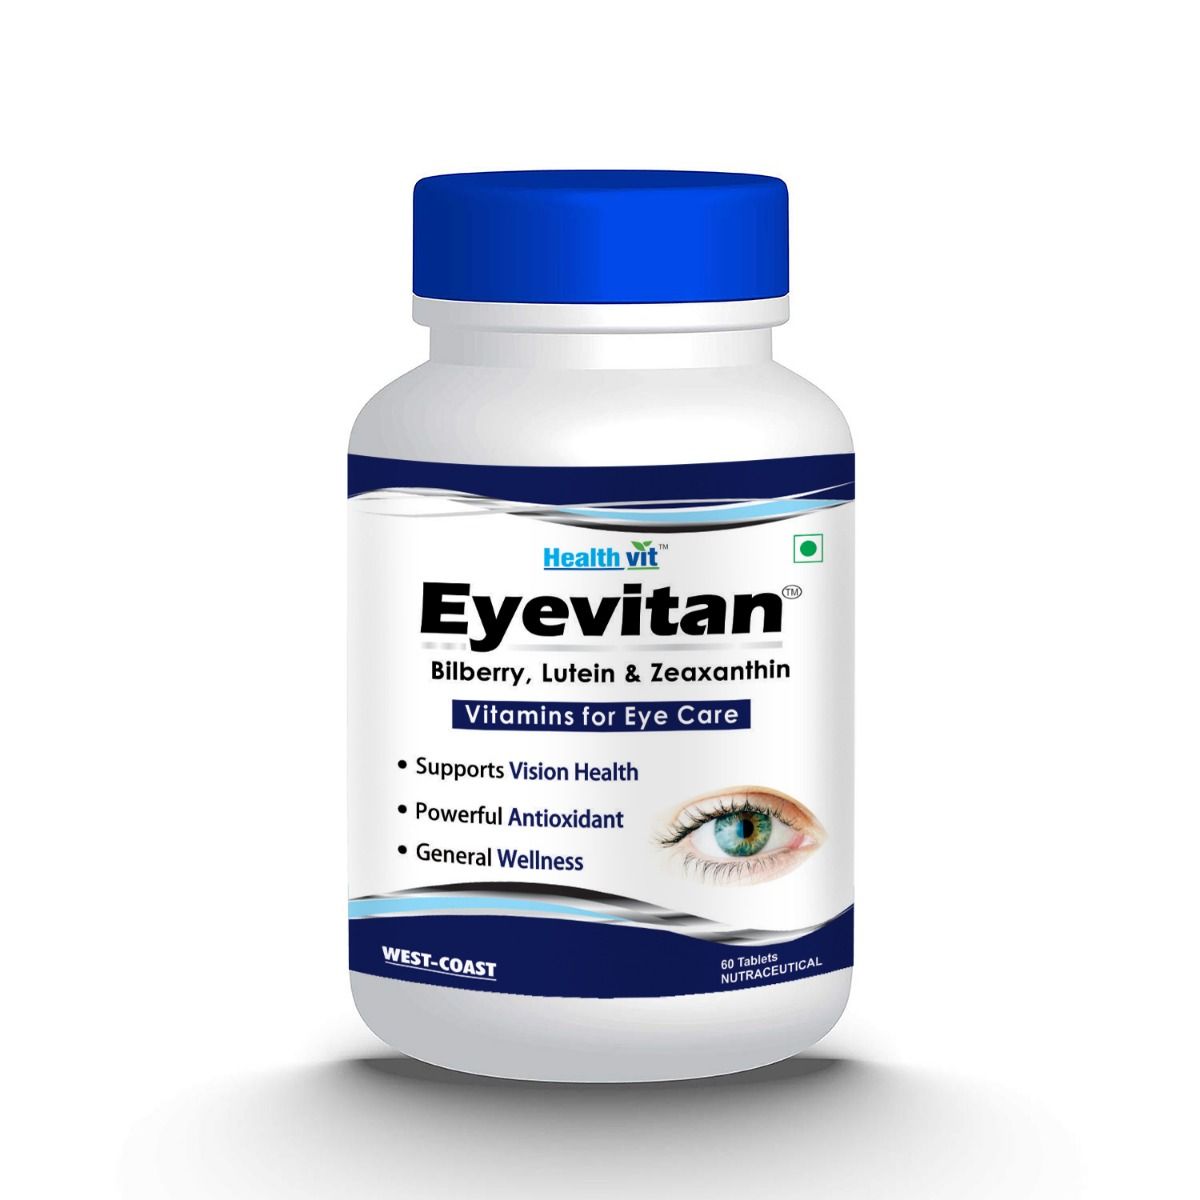 Healthvit Eyevitan Vitamins for Eye Care, 60 Tablets, Pack of 1 